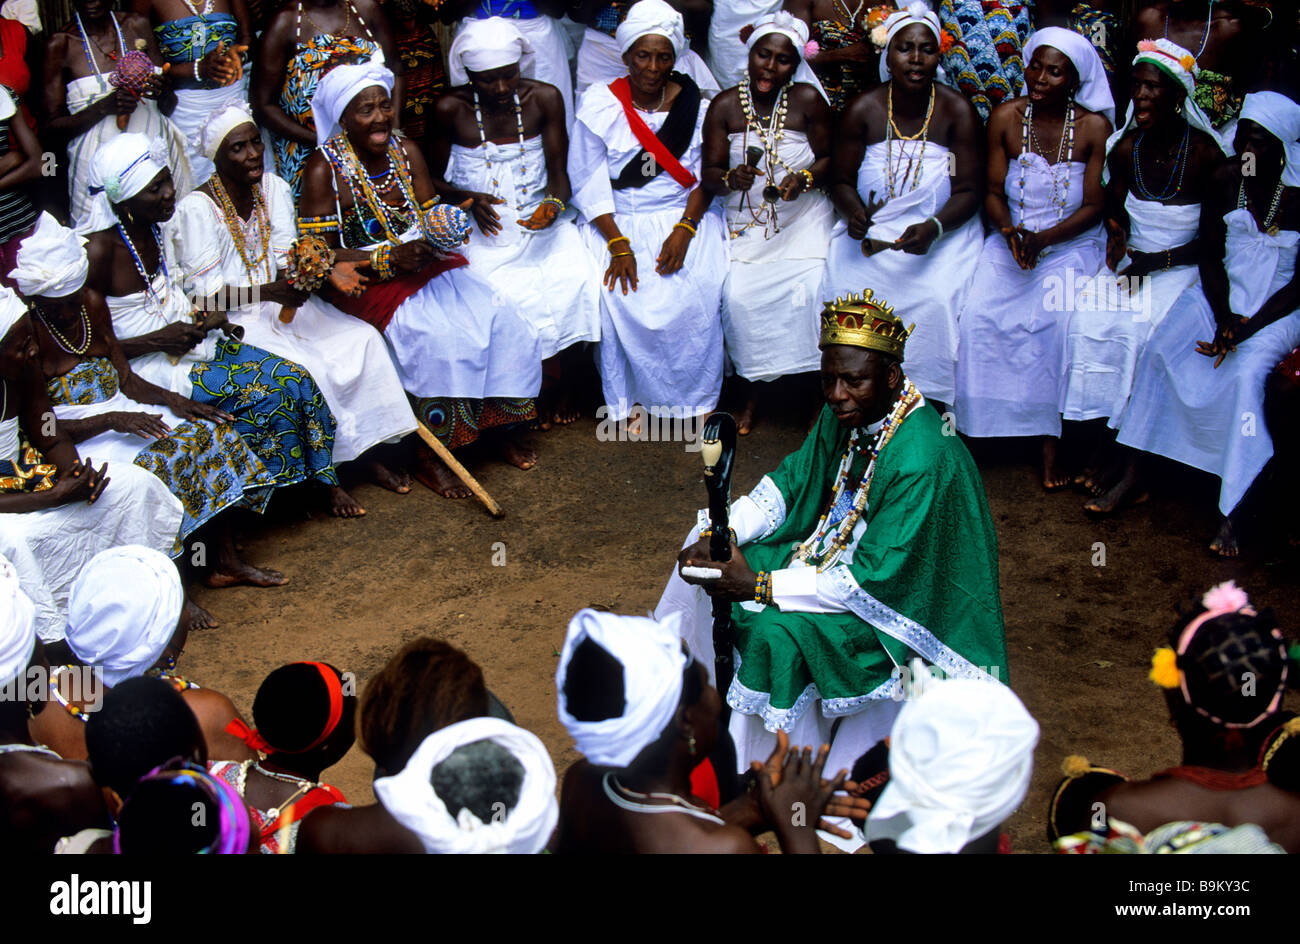 Il Benin, Mono County, Sahoue Doutou, re di fetishers Houngue Towakon Guedehoungue II con la sua corte Foto Stock